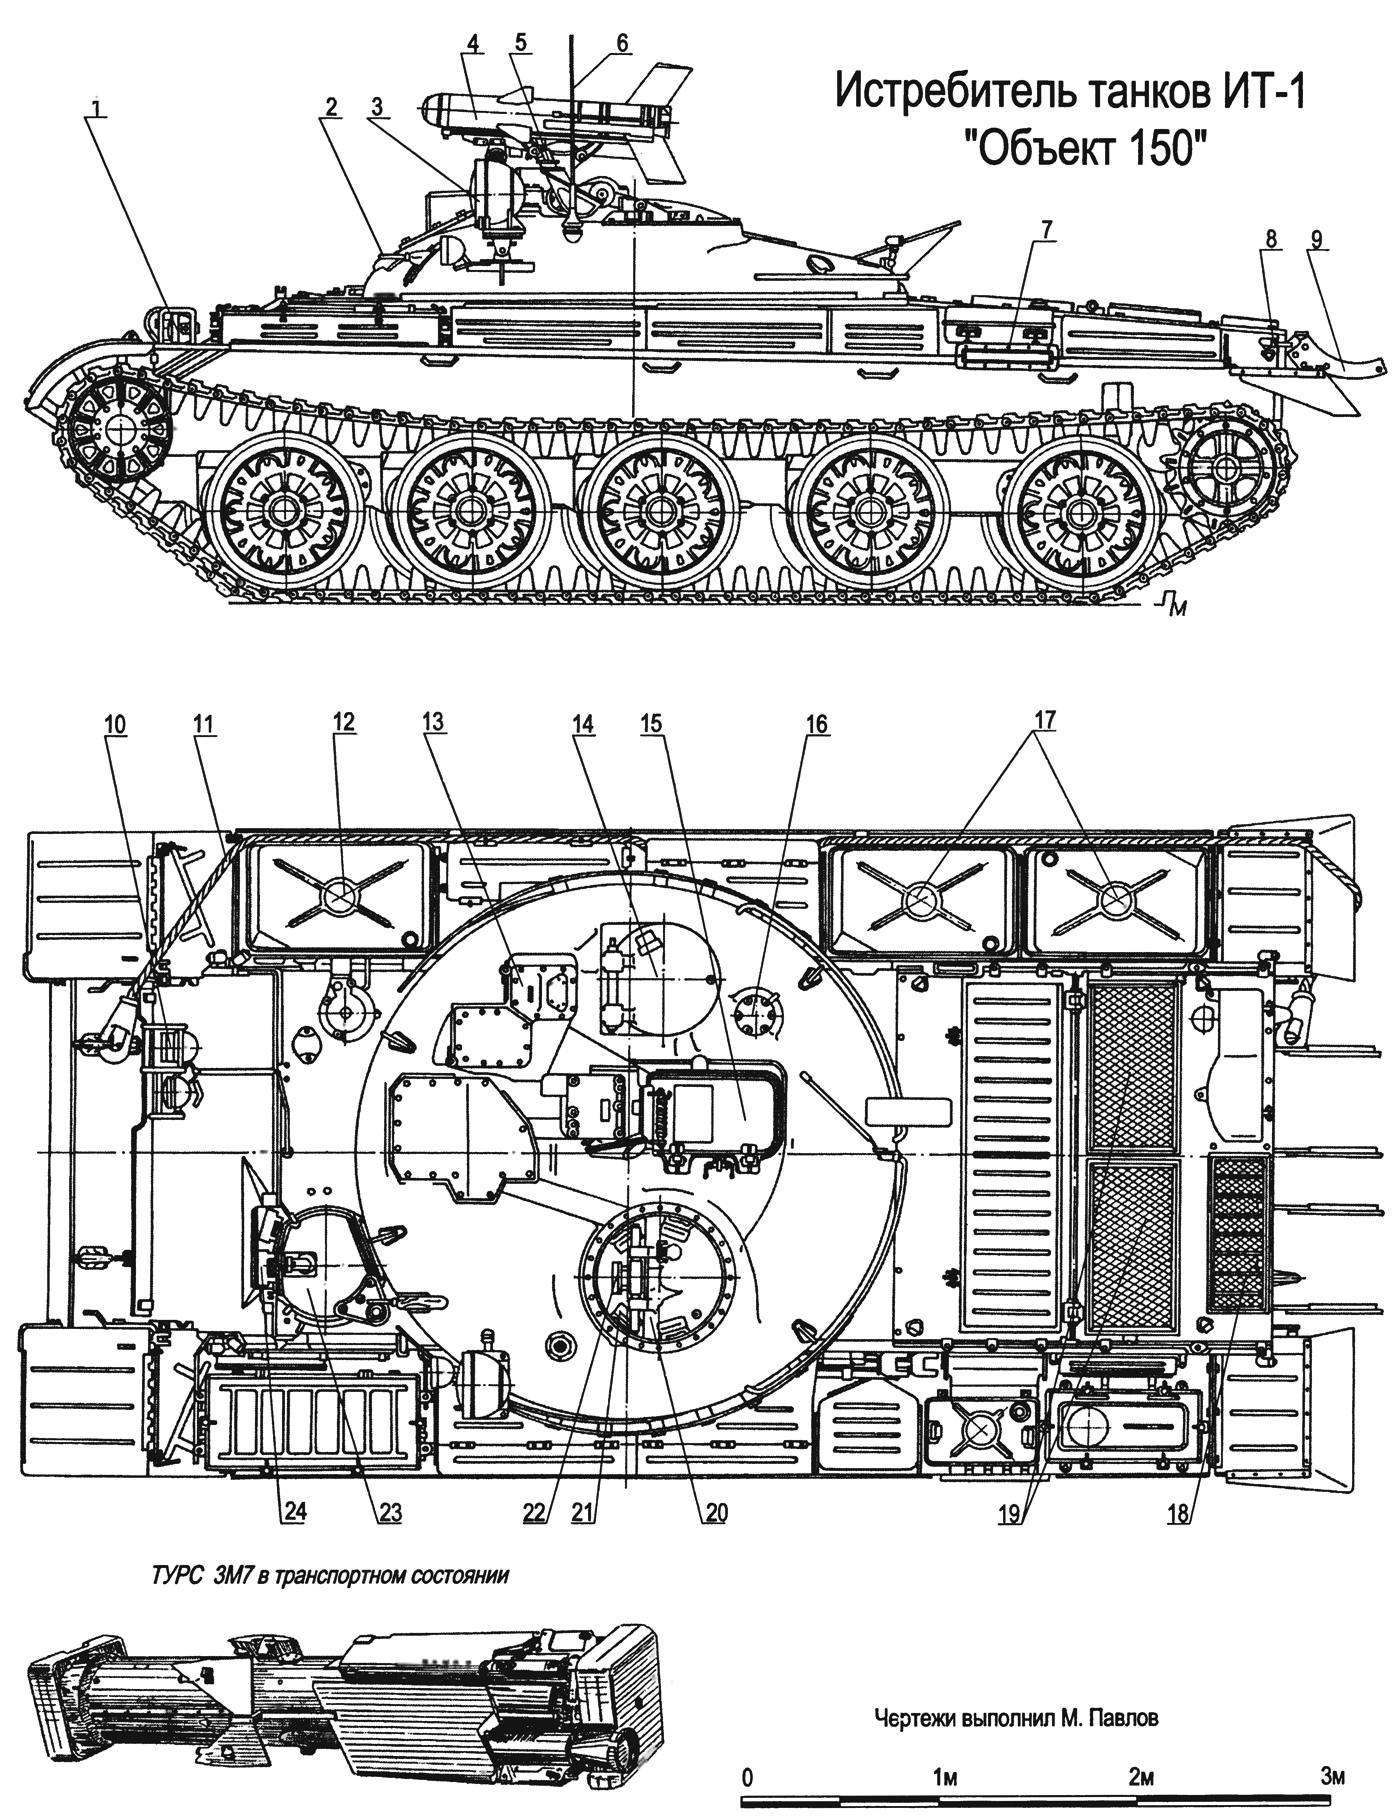 Fig. 1. Tank destroyer it-1